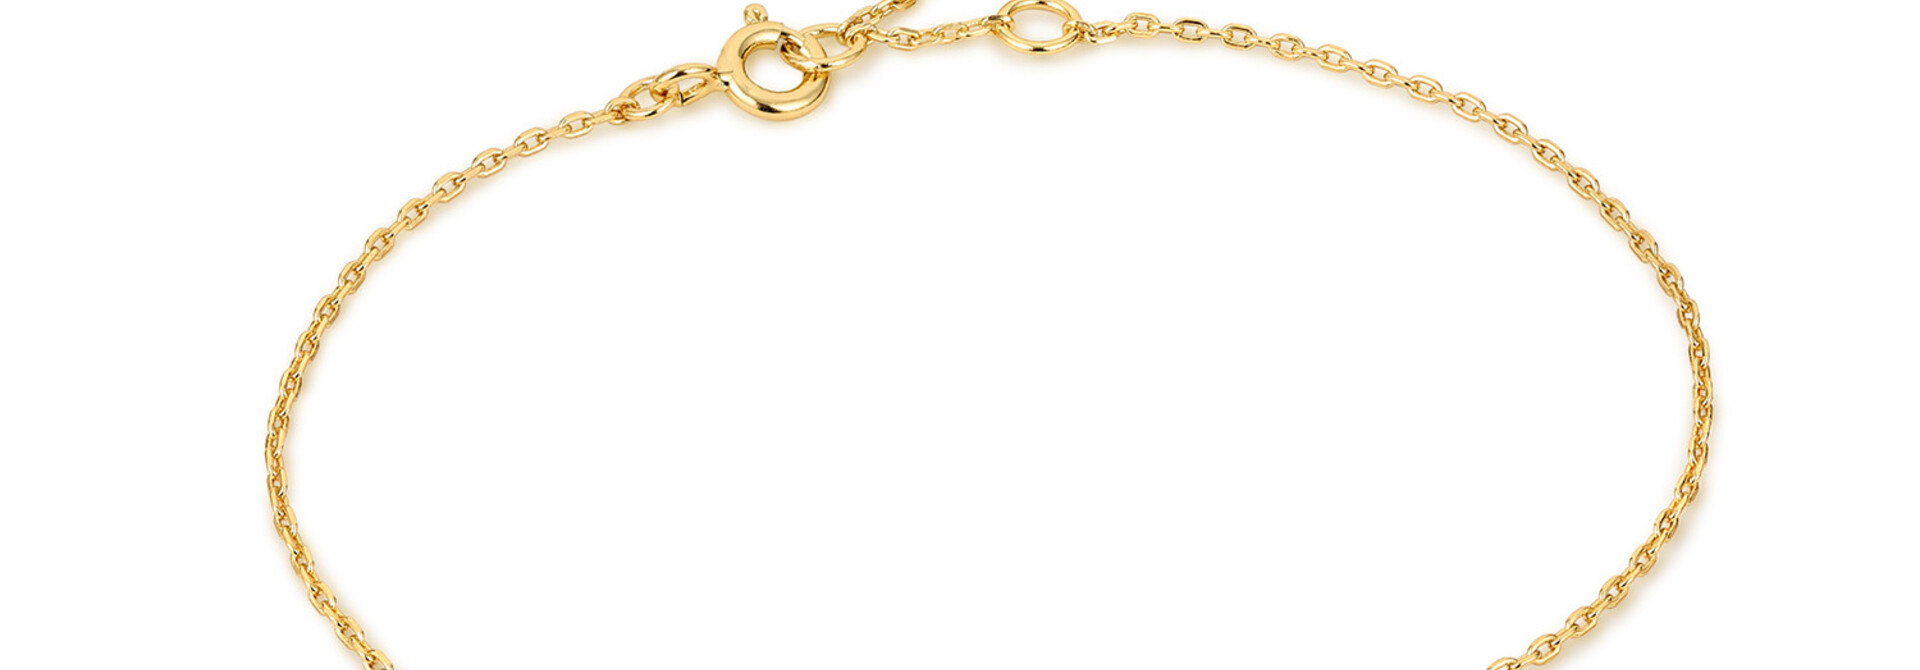 Sparkle Emblem Chain Armband - Gold Plated